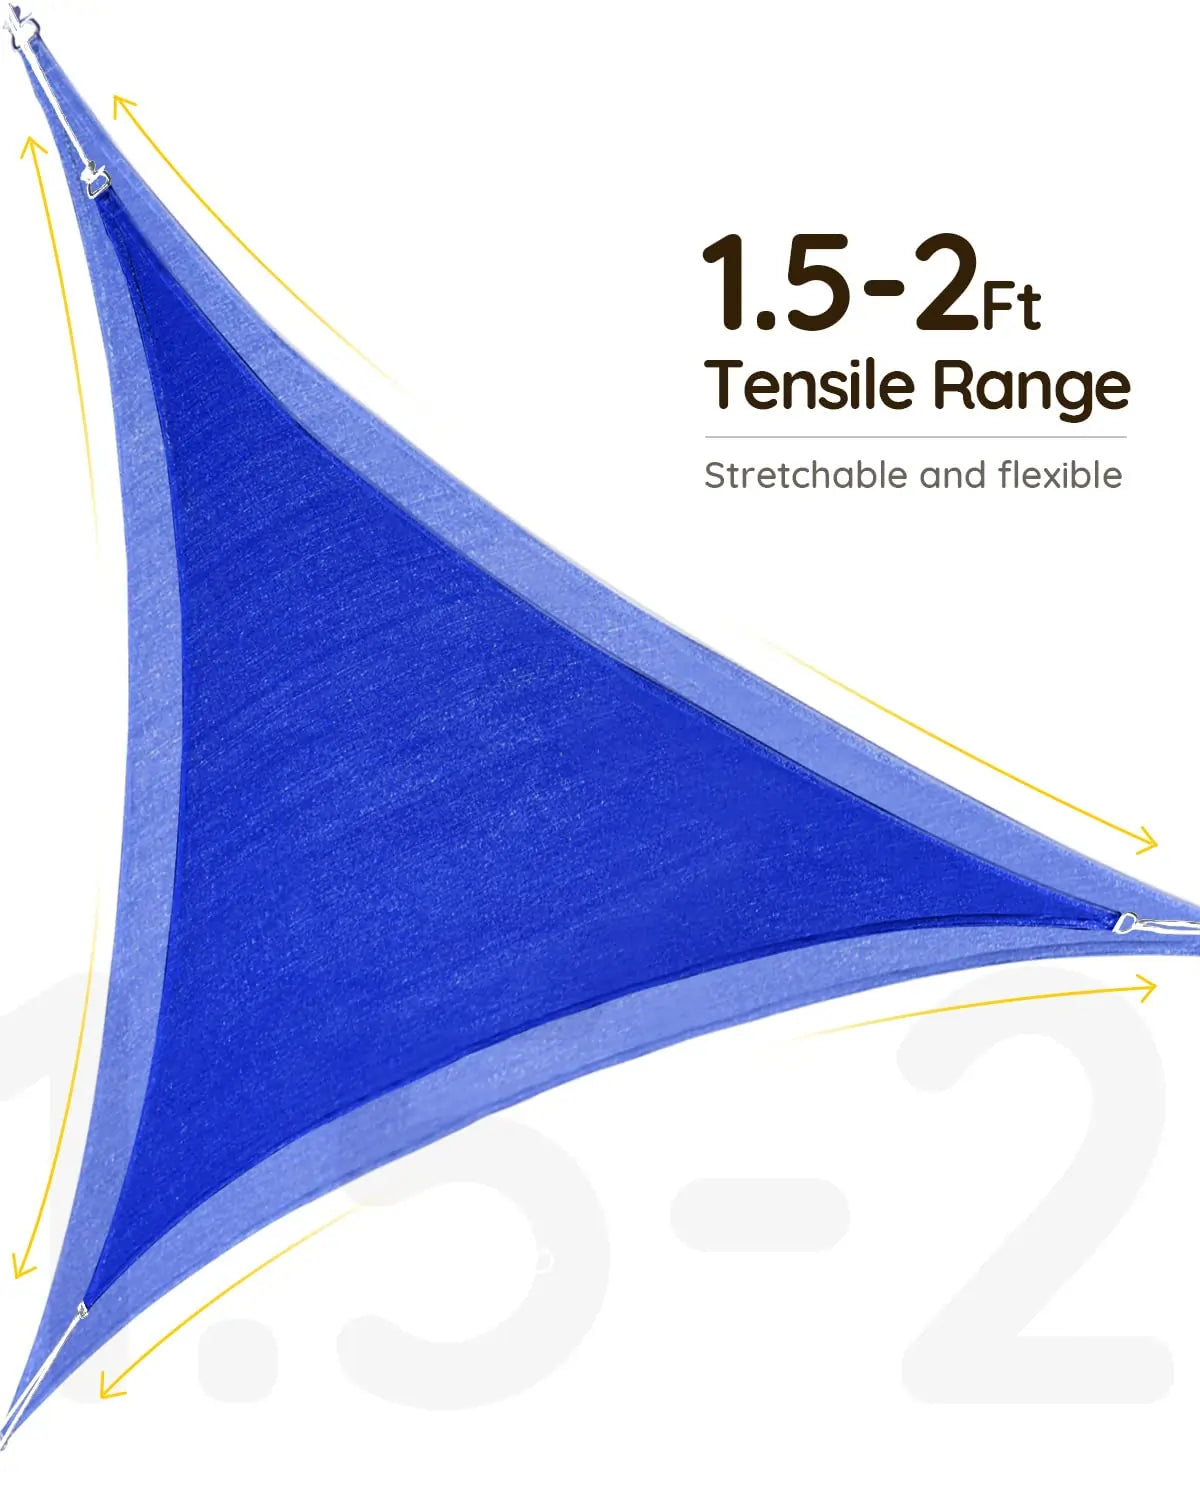 Blue Triangle shade sail range